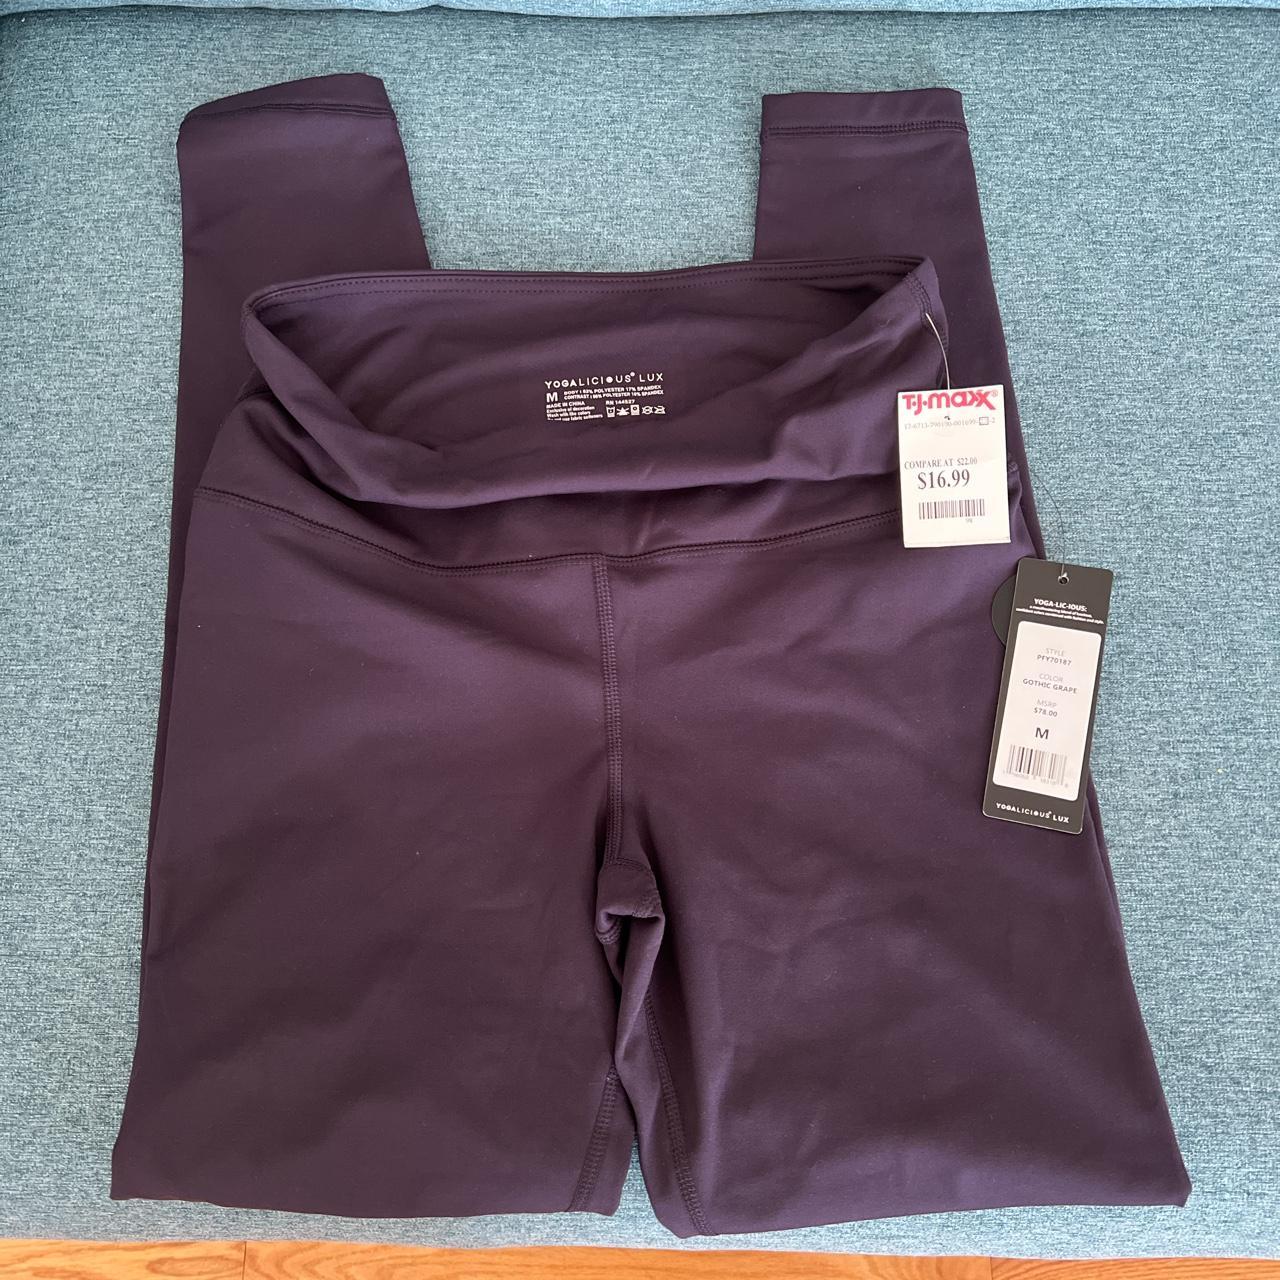 brand new, yogalicious lux fleece lined leggings - Depop